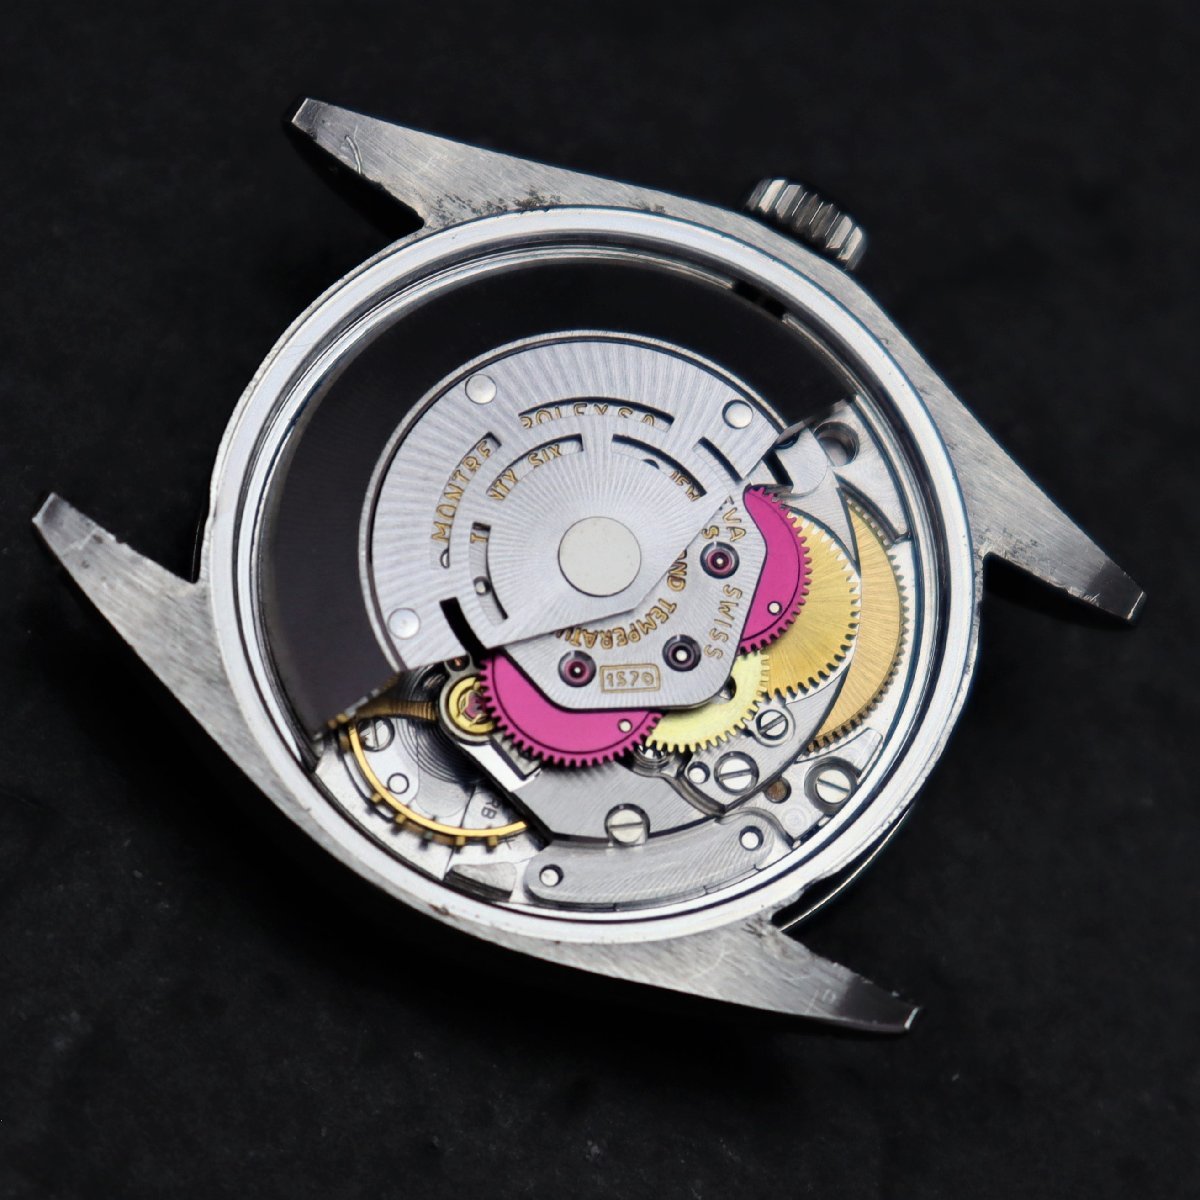 ROLEX OYSTER ロレックス オイスター パーペチュアルデイト Ref.1500 Cal.1570 自動巻き 1971年製造 純正ブレス スイス 製 メンズ腕時計 の商品詳細 | 日本のオークション・ショッピングサイトの代理入札・購入 | FROM JAPAN